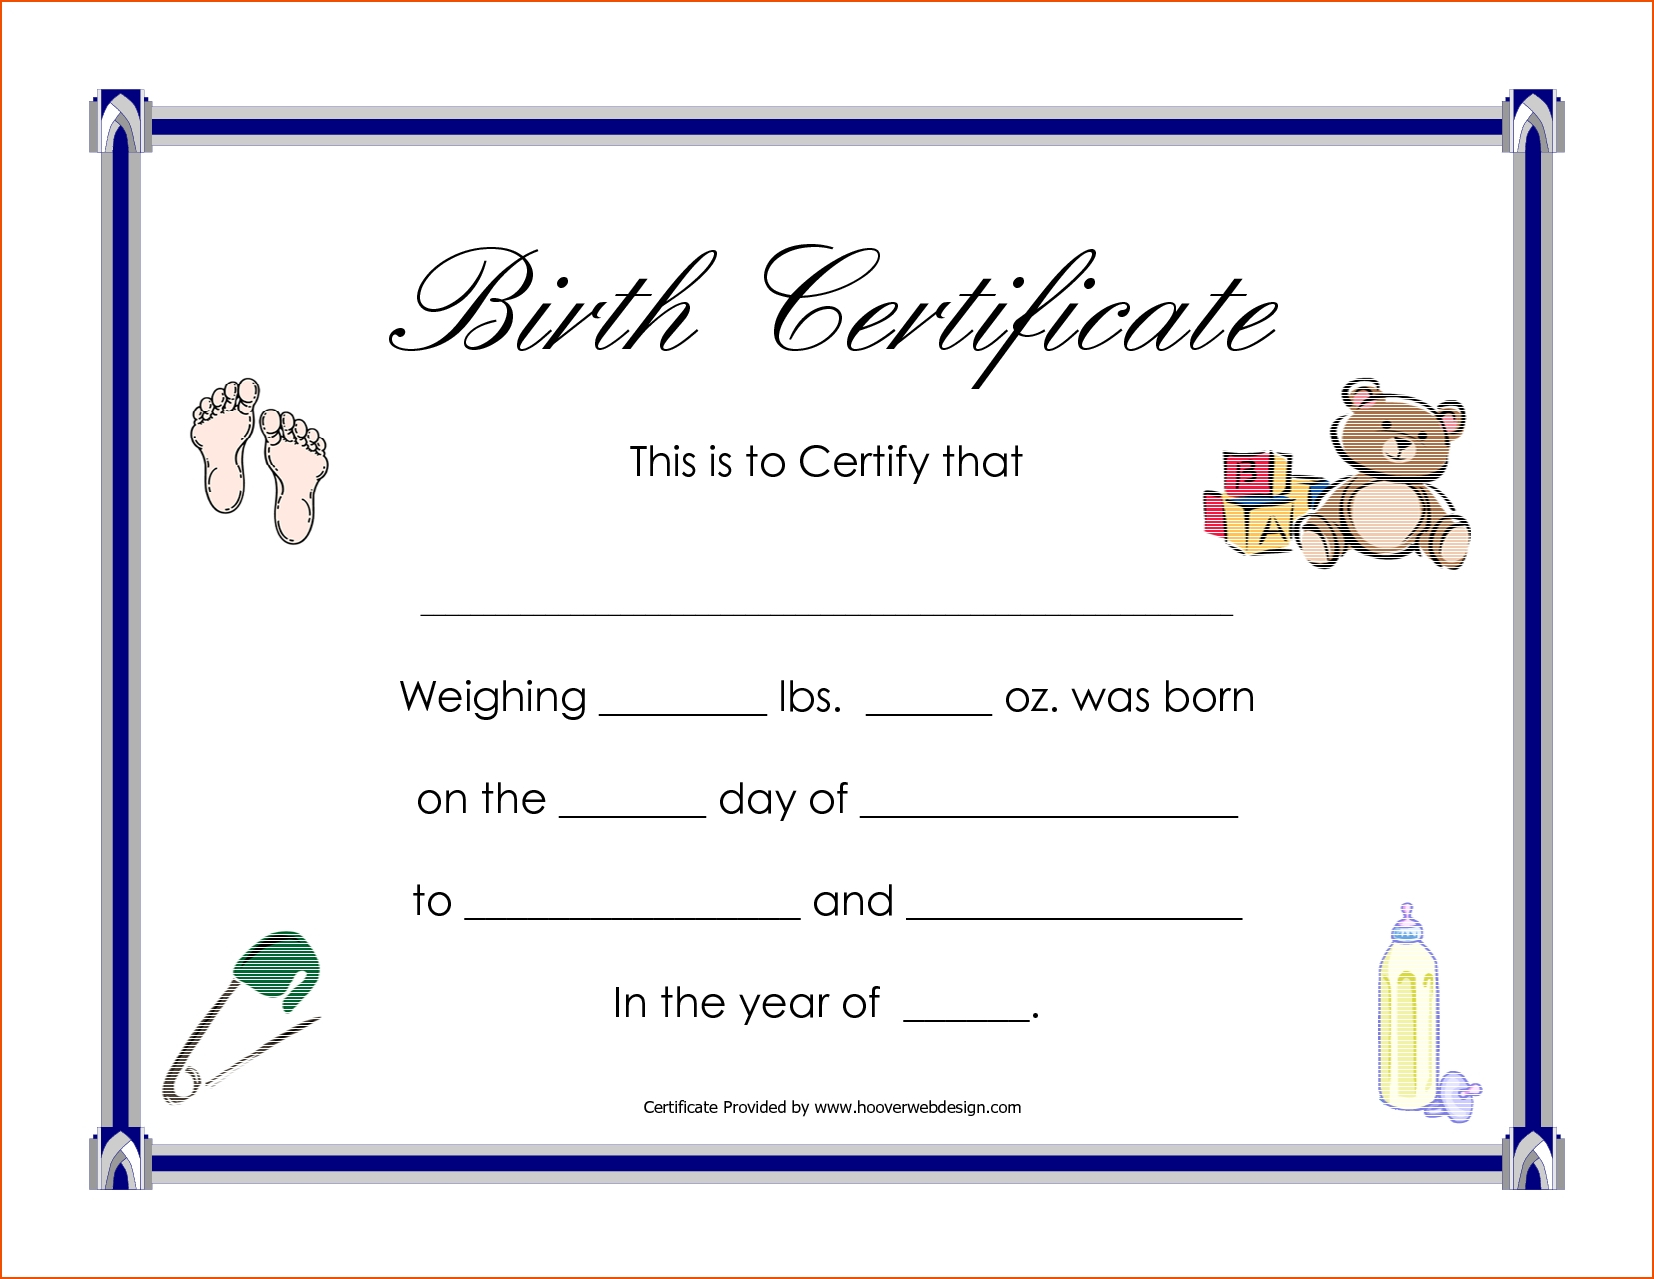 A Birth Certificate Template | Safebest.xyz Regarding Editable Birth Certificate Template